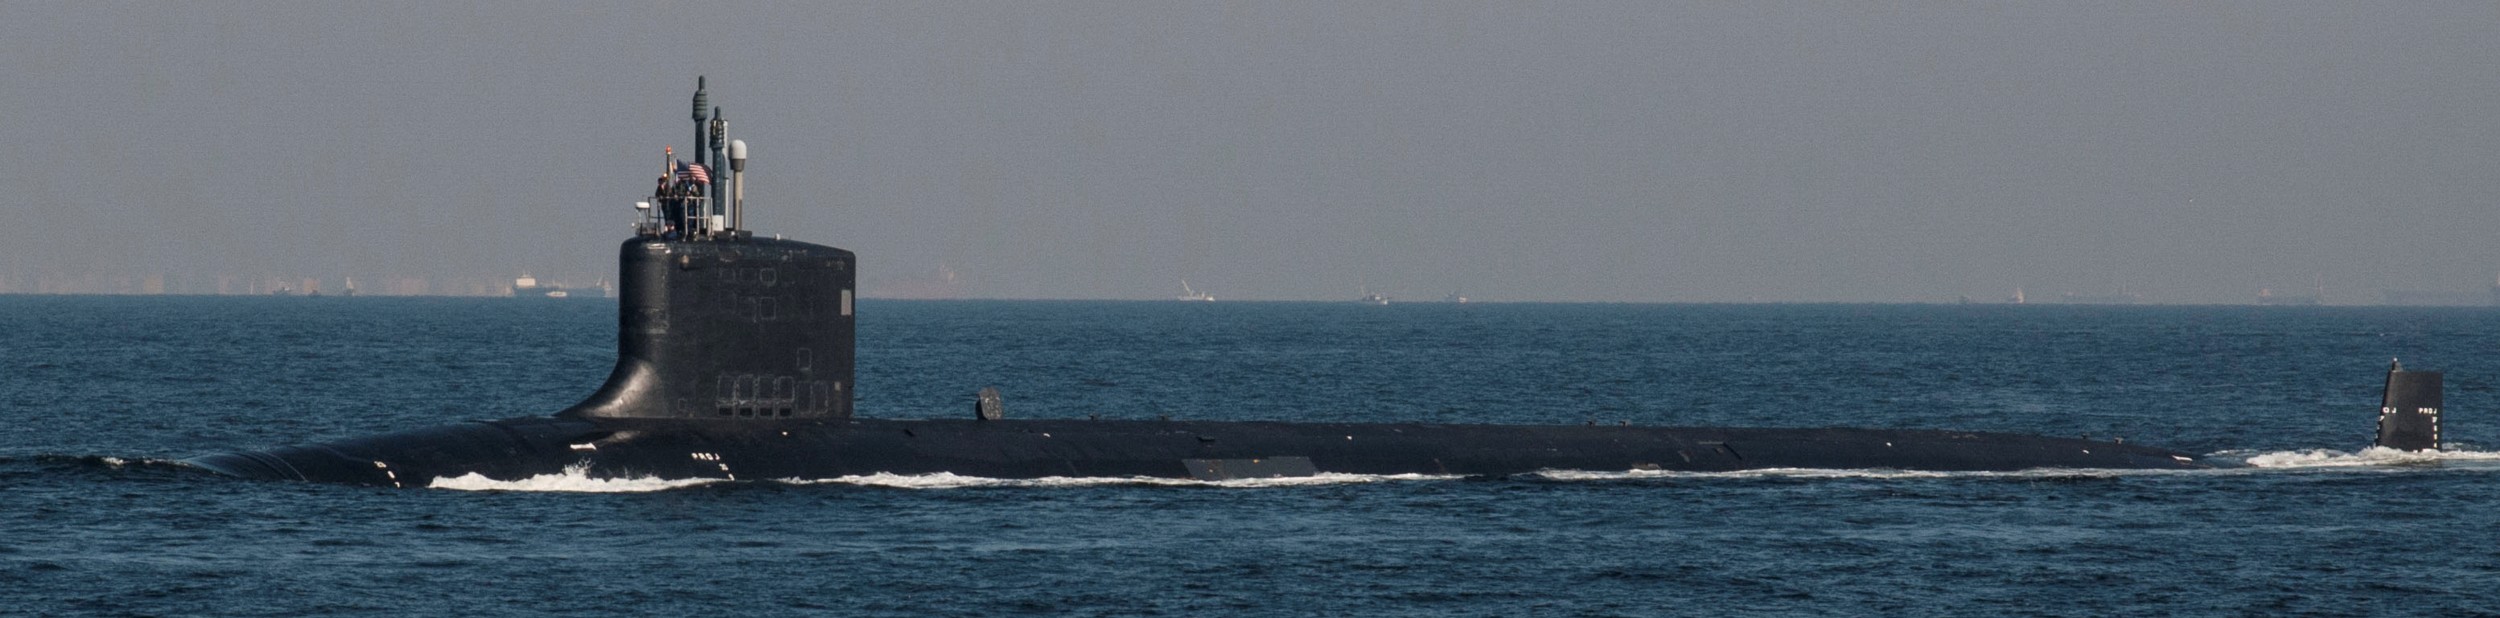 ssn-777 uss north carolina virginia class attack submarine us navy 2015 04 yokosuka fleet activities